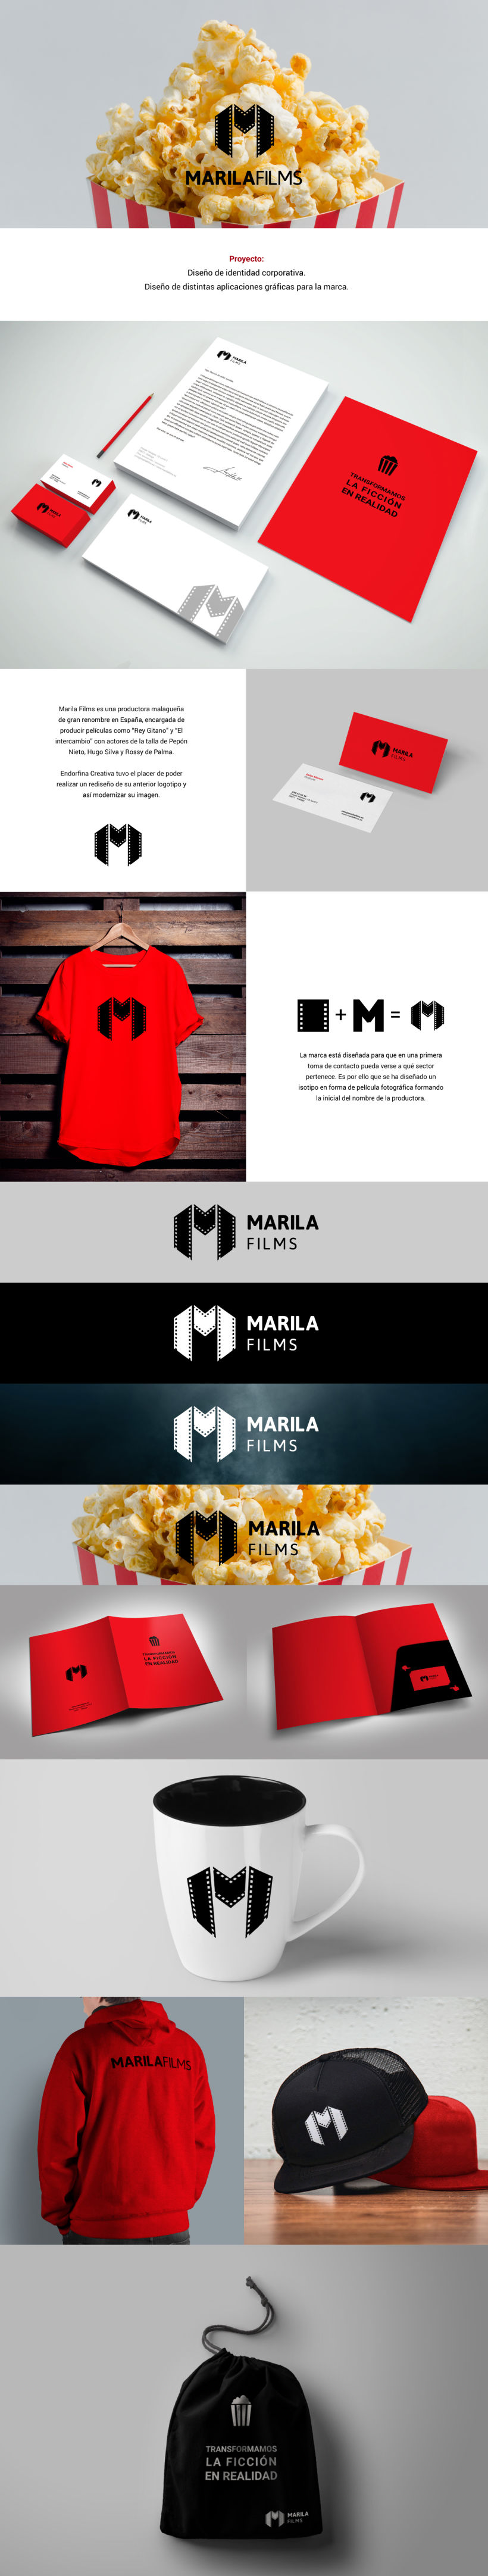 Identidad corporativa para MARILA FILMS 0